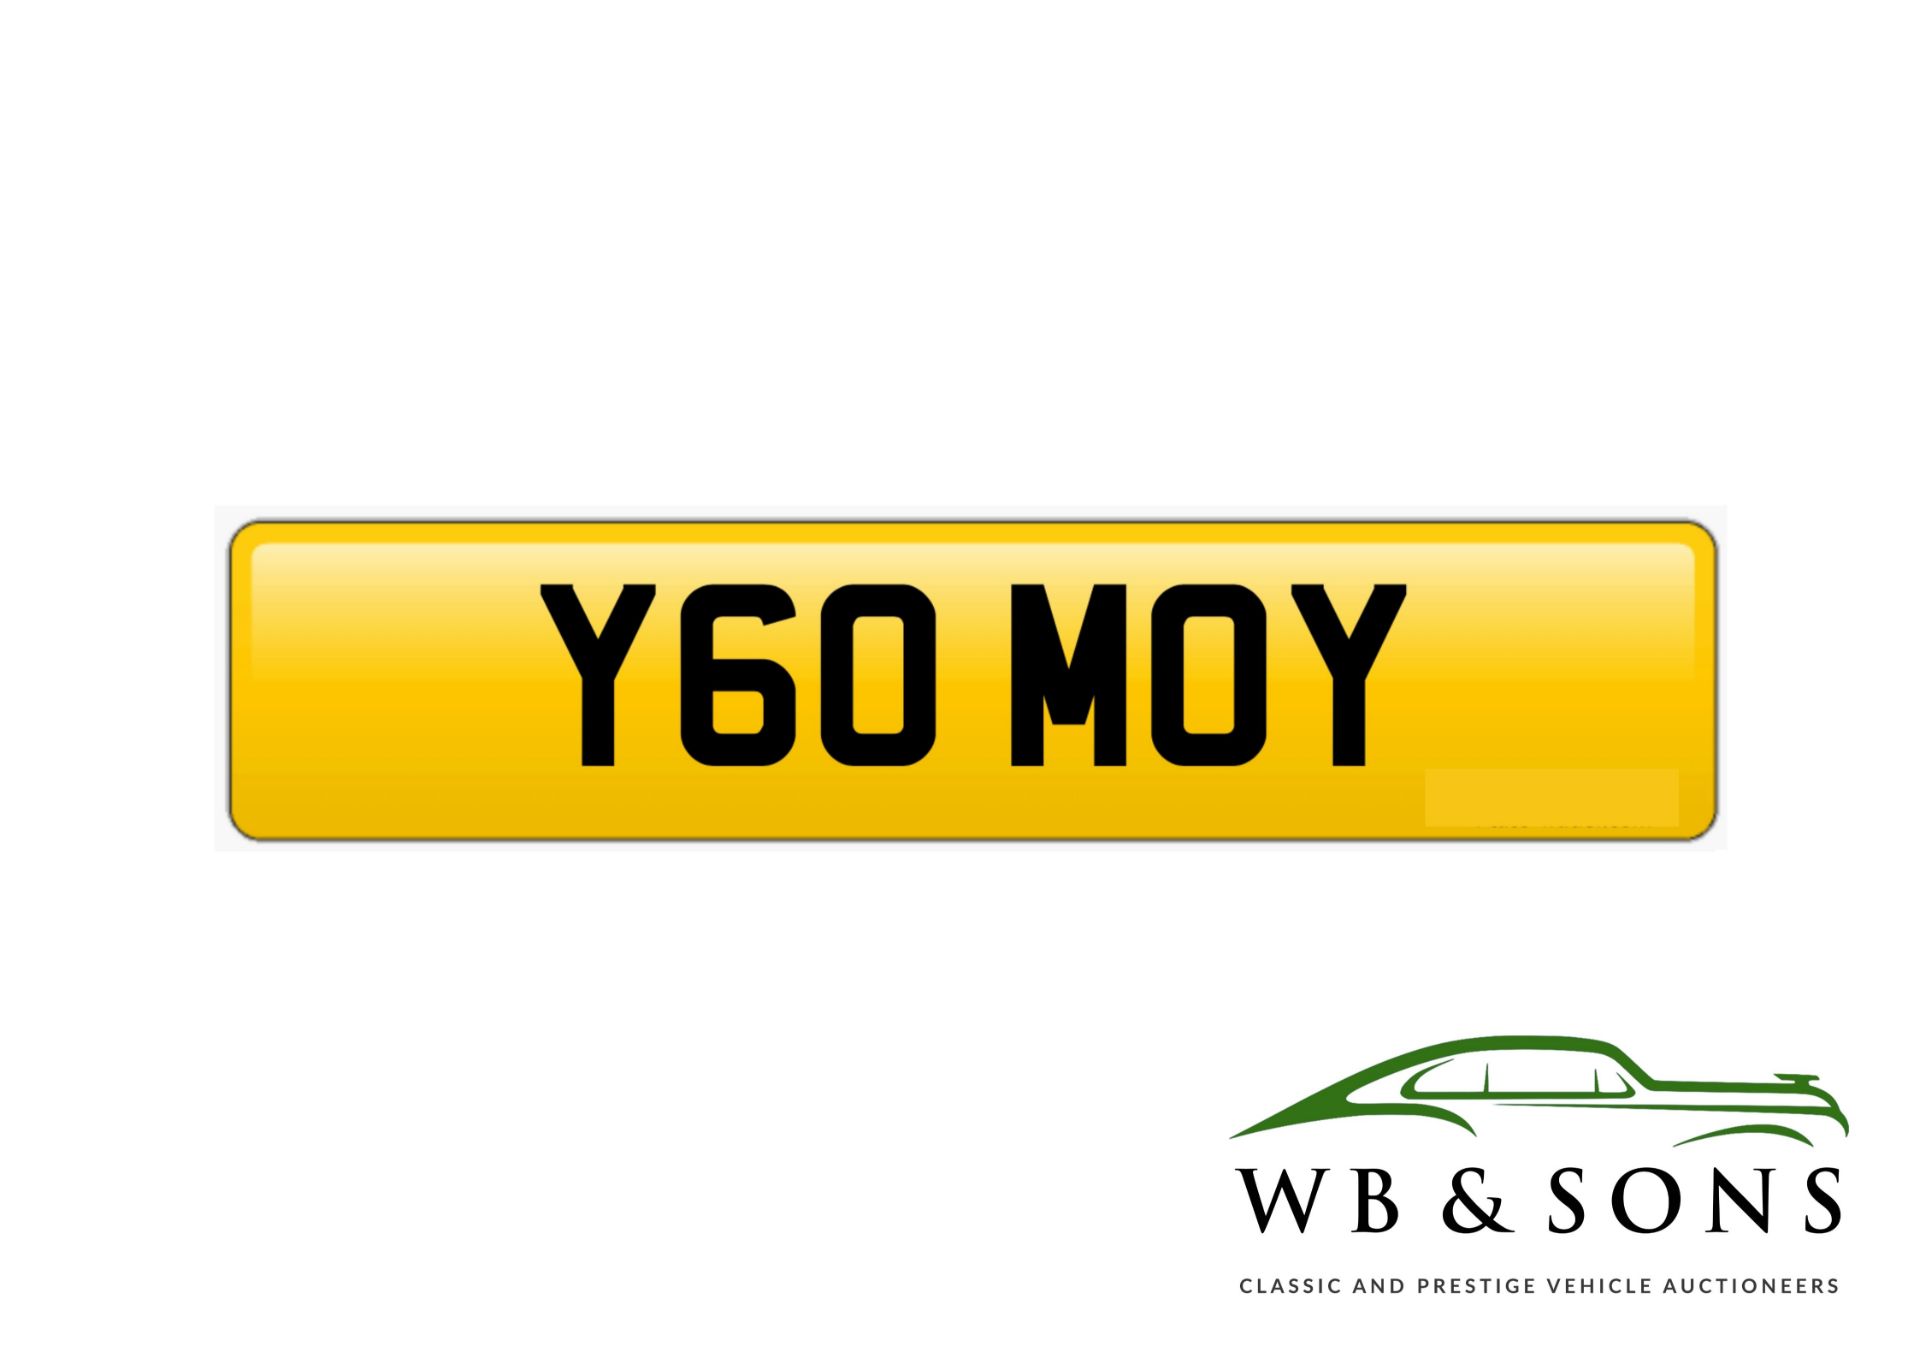 Registration - Y60 MOY - Image 2 of 2